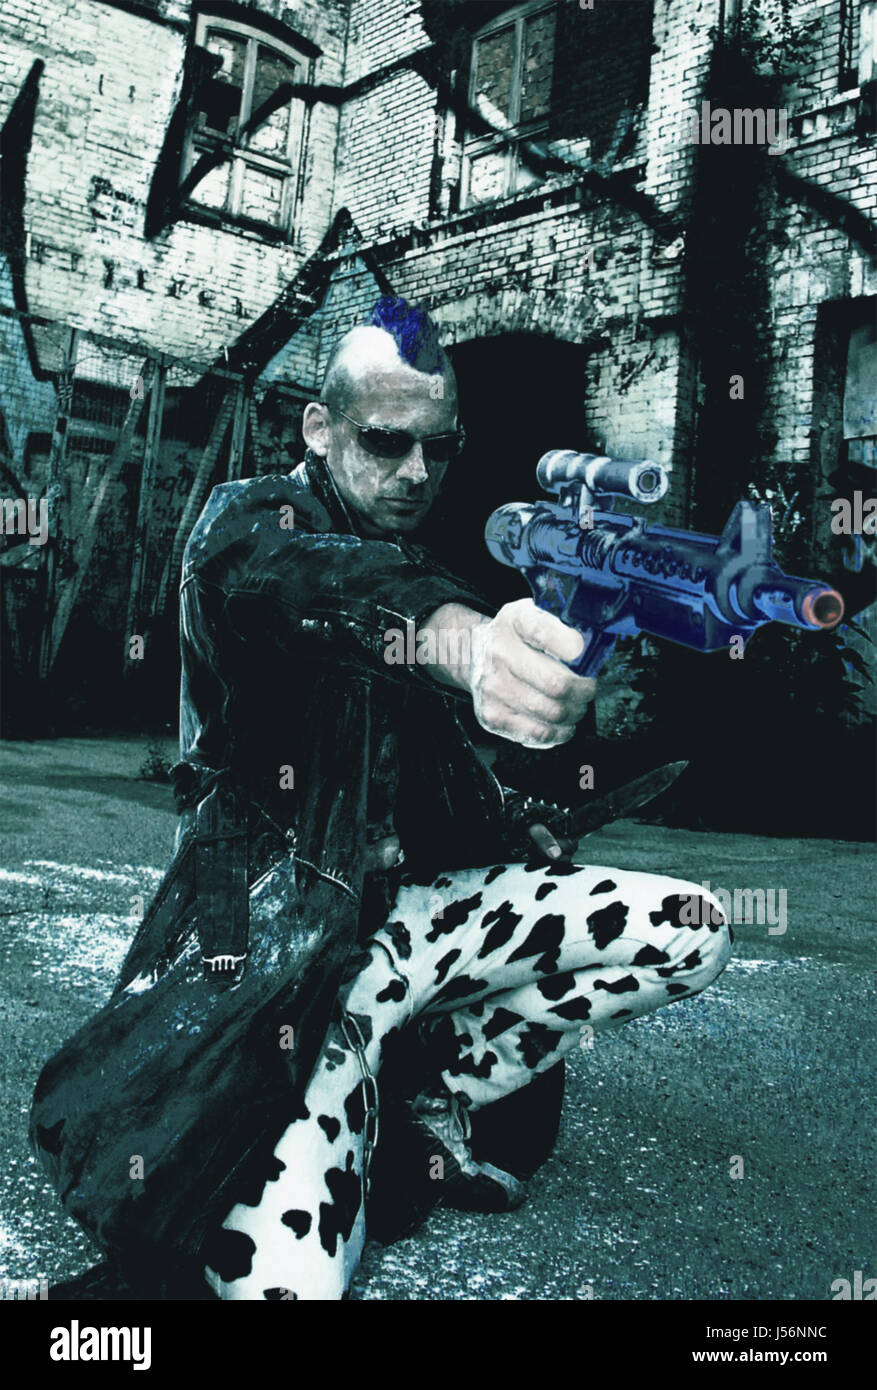 cool trash bad peccant wickedly evil gun firearm punk man mann iro sci-fi  Stock Photo - Alamy